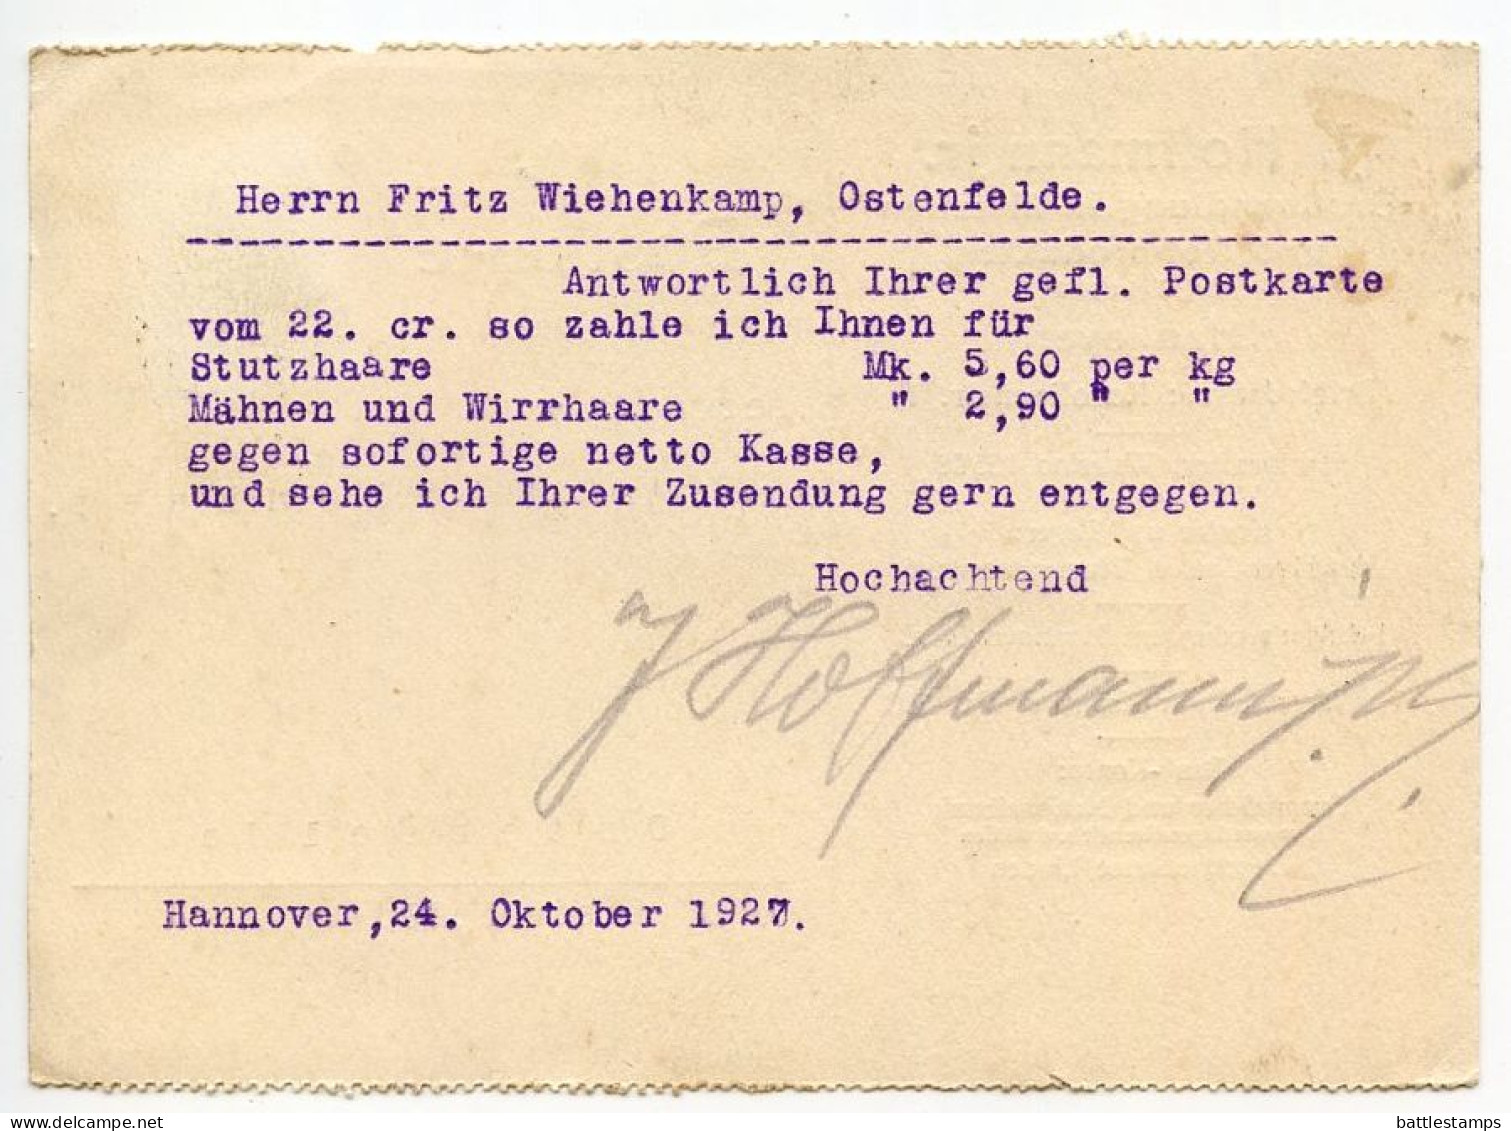 Germany 1927 Postcard; Hannover-Linden - J. Hoffman Jr, Großhandlung In Metallen Und Rohprodukten; 8pf. Beethoven - Briefe U. Dokumente